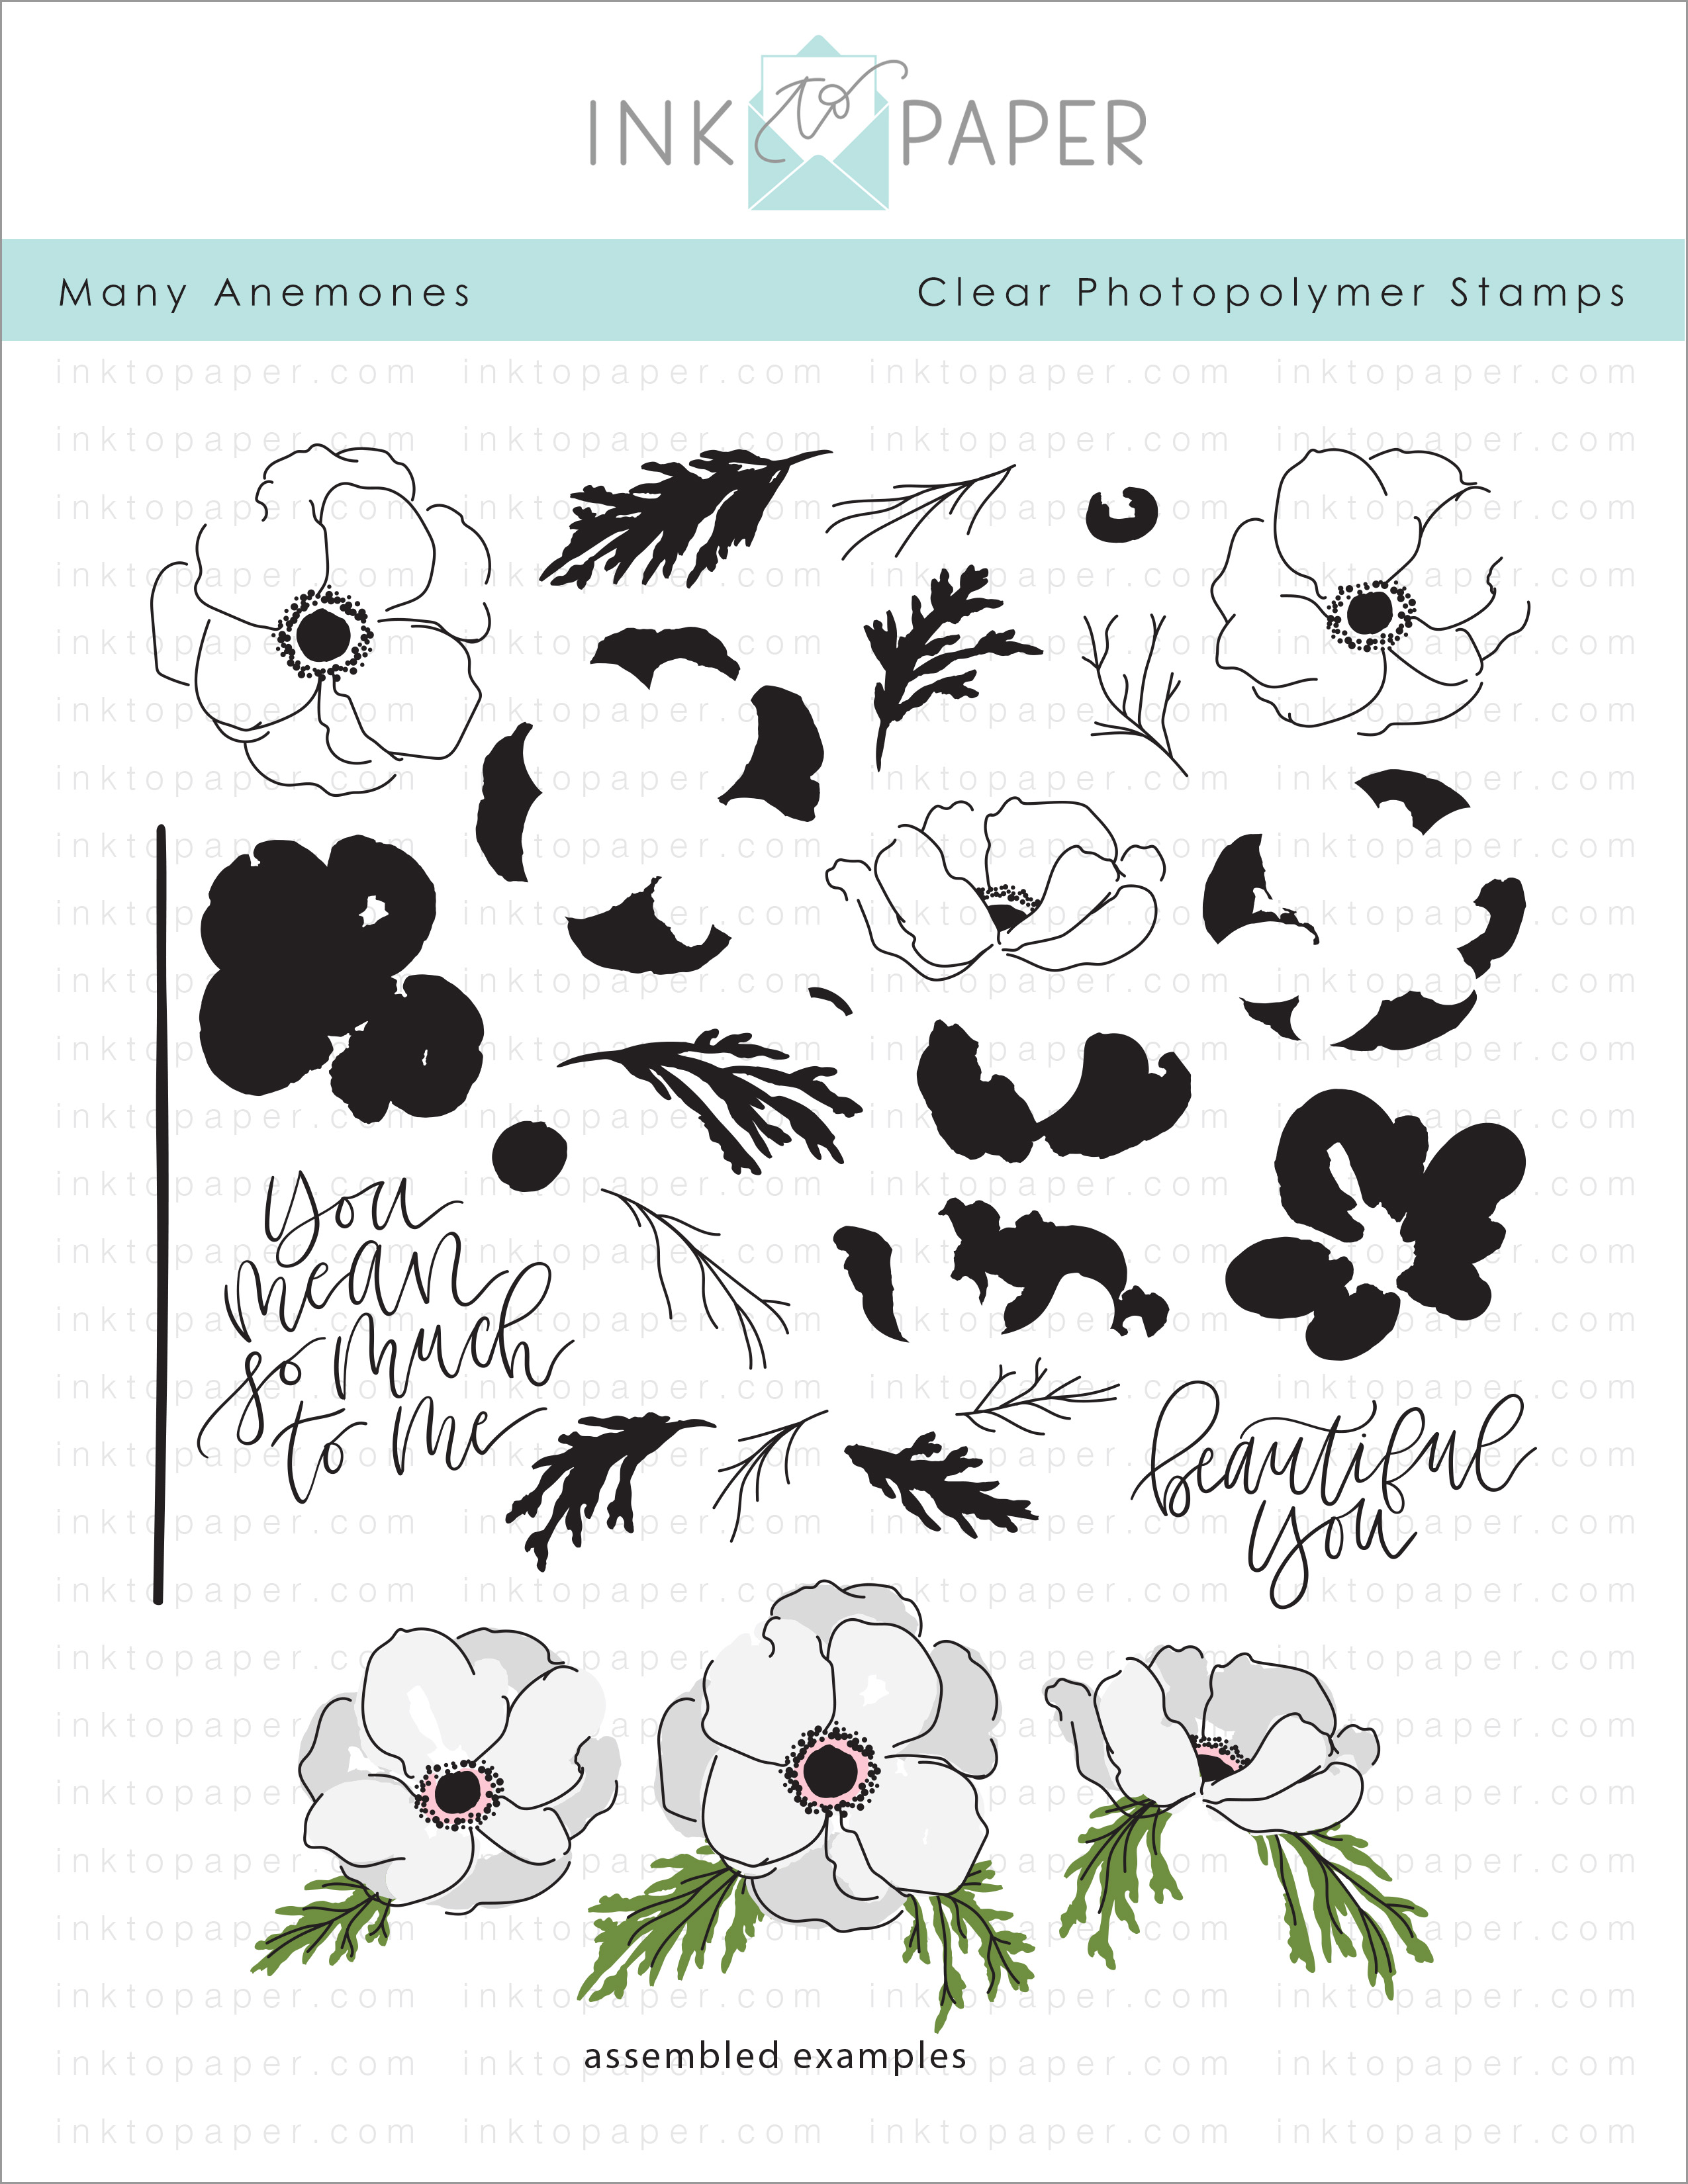 Many Anemones Stamp Set: Papertrey Ink